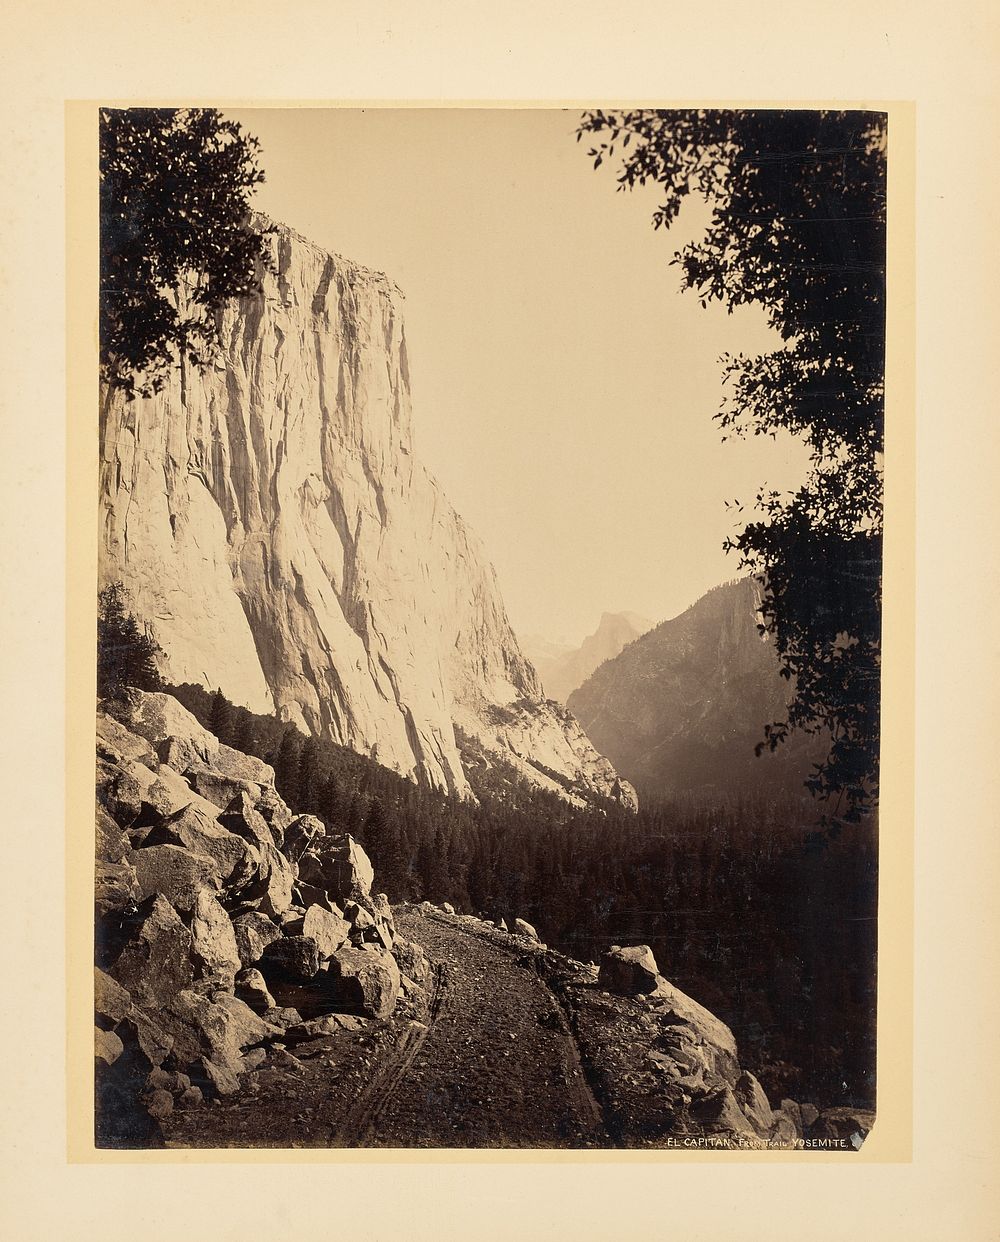 El Capitan from Trail, Yosemite by John K Hillers